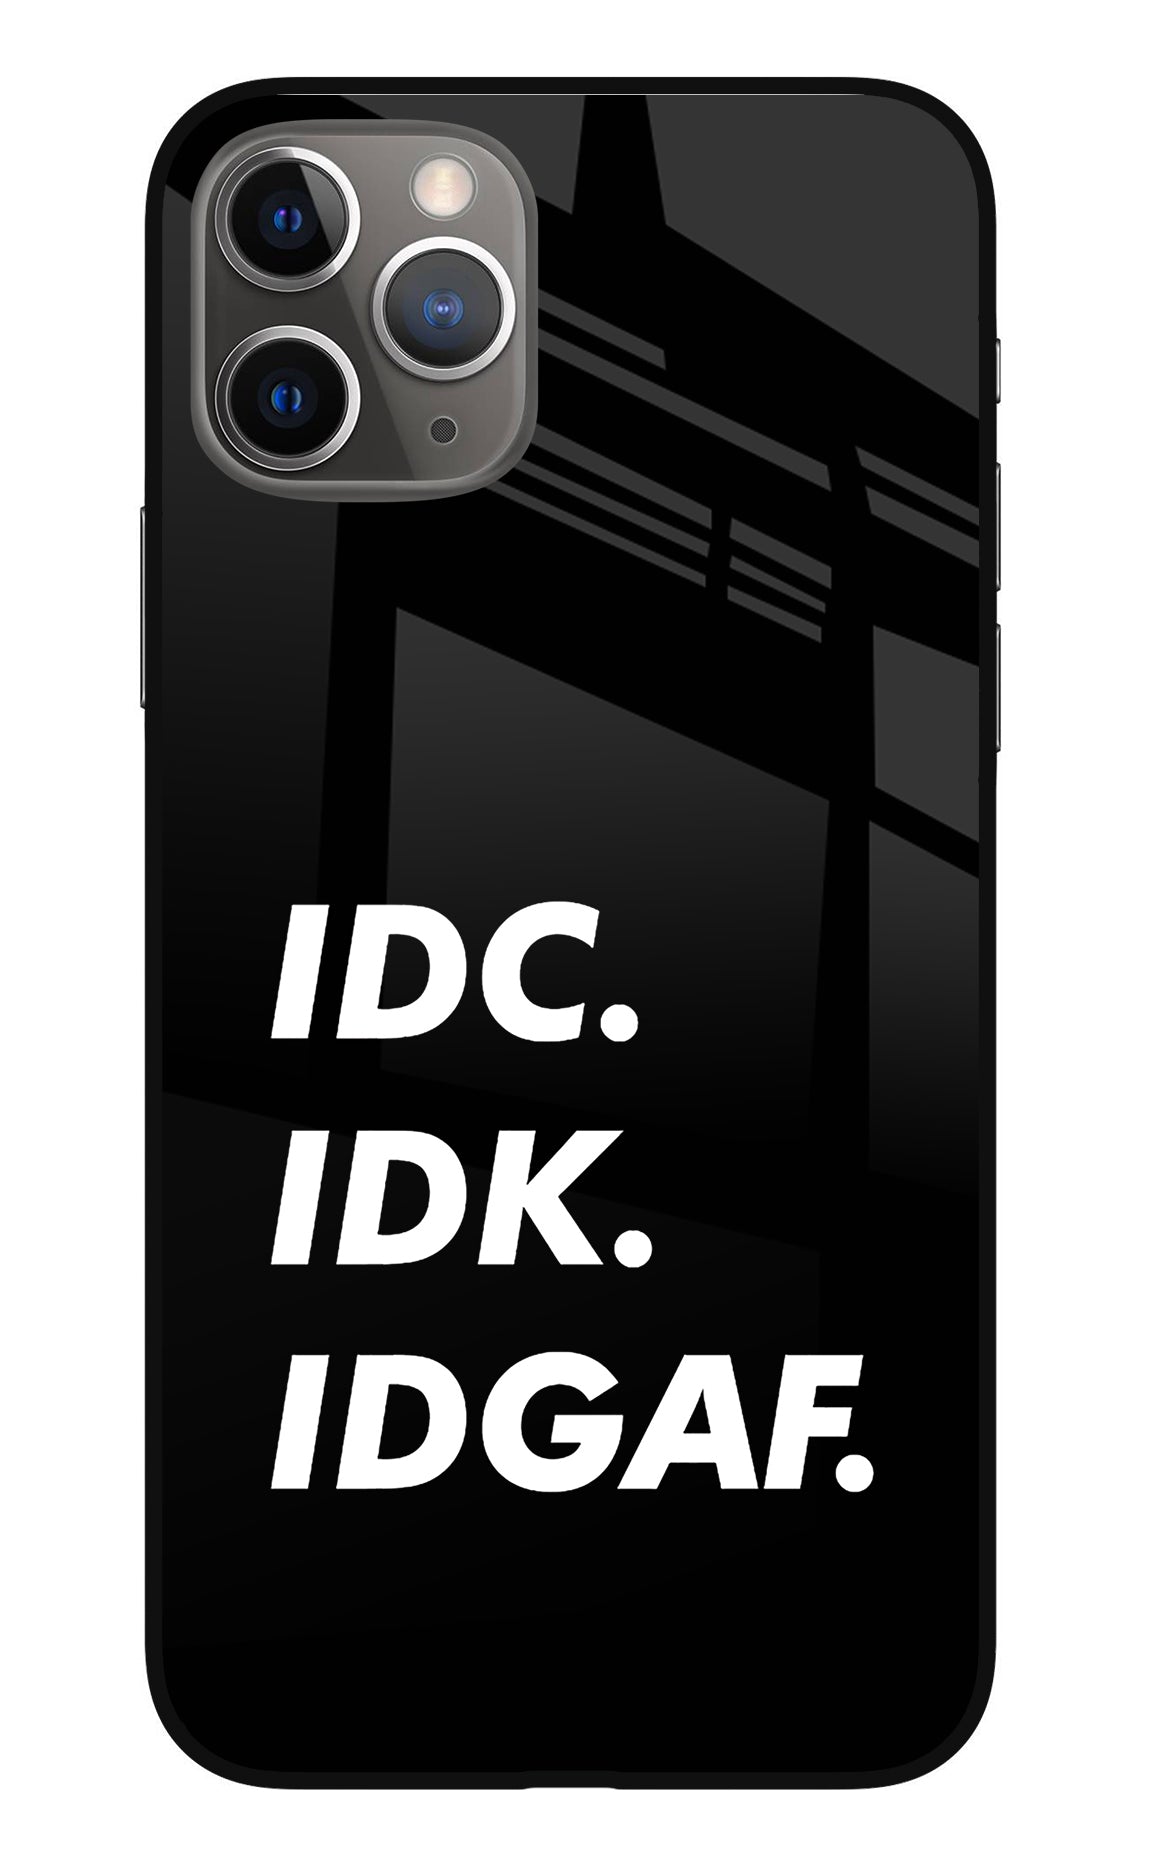 Idc Idk Idgaf iPhone 11 Pro Back Cover